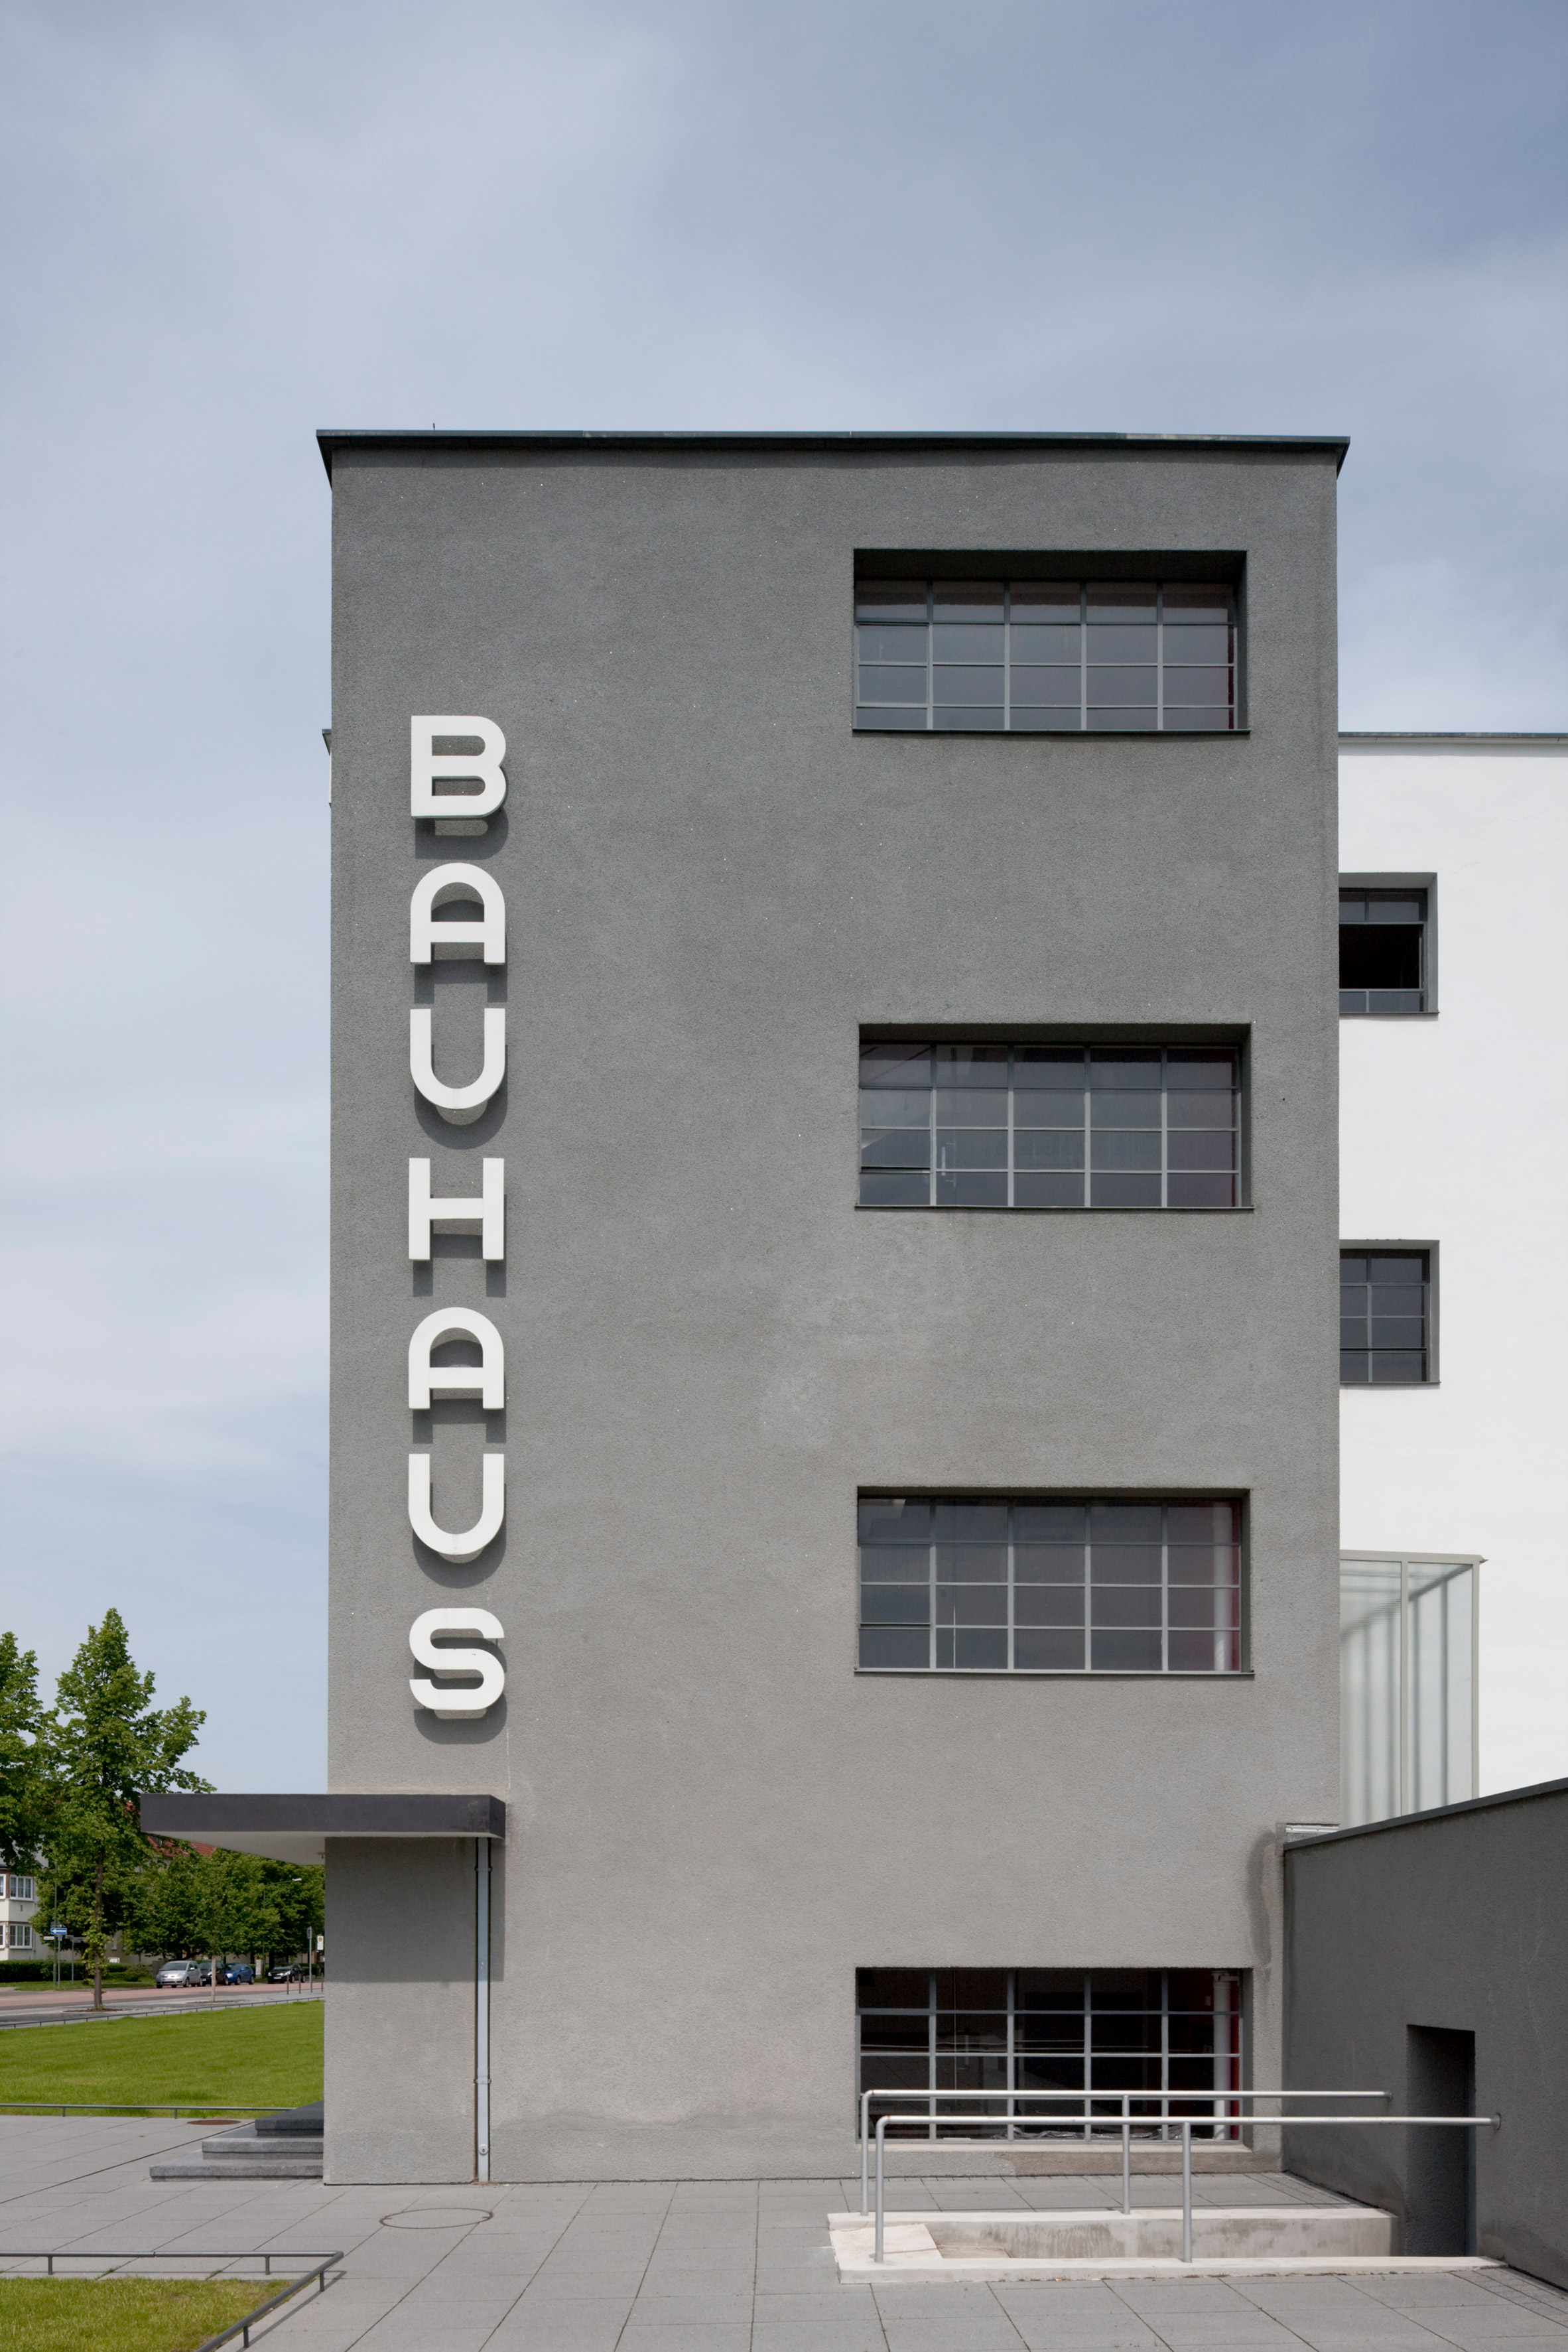 Herbert Bayer: designer of the Bauhaus' universal typography